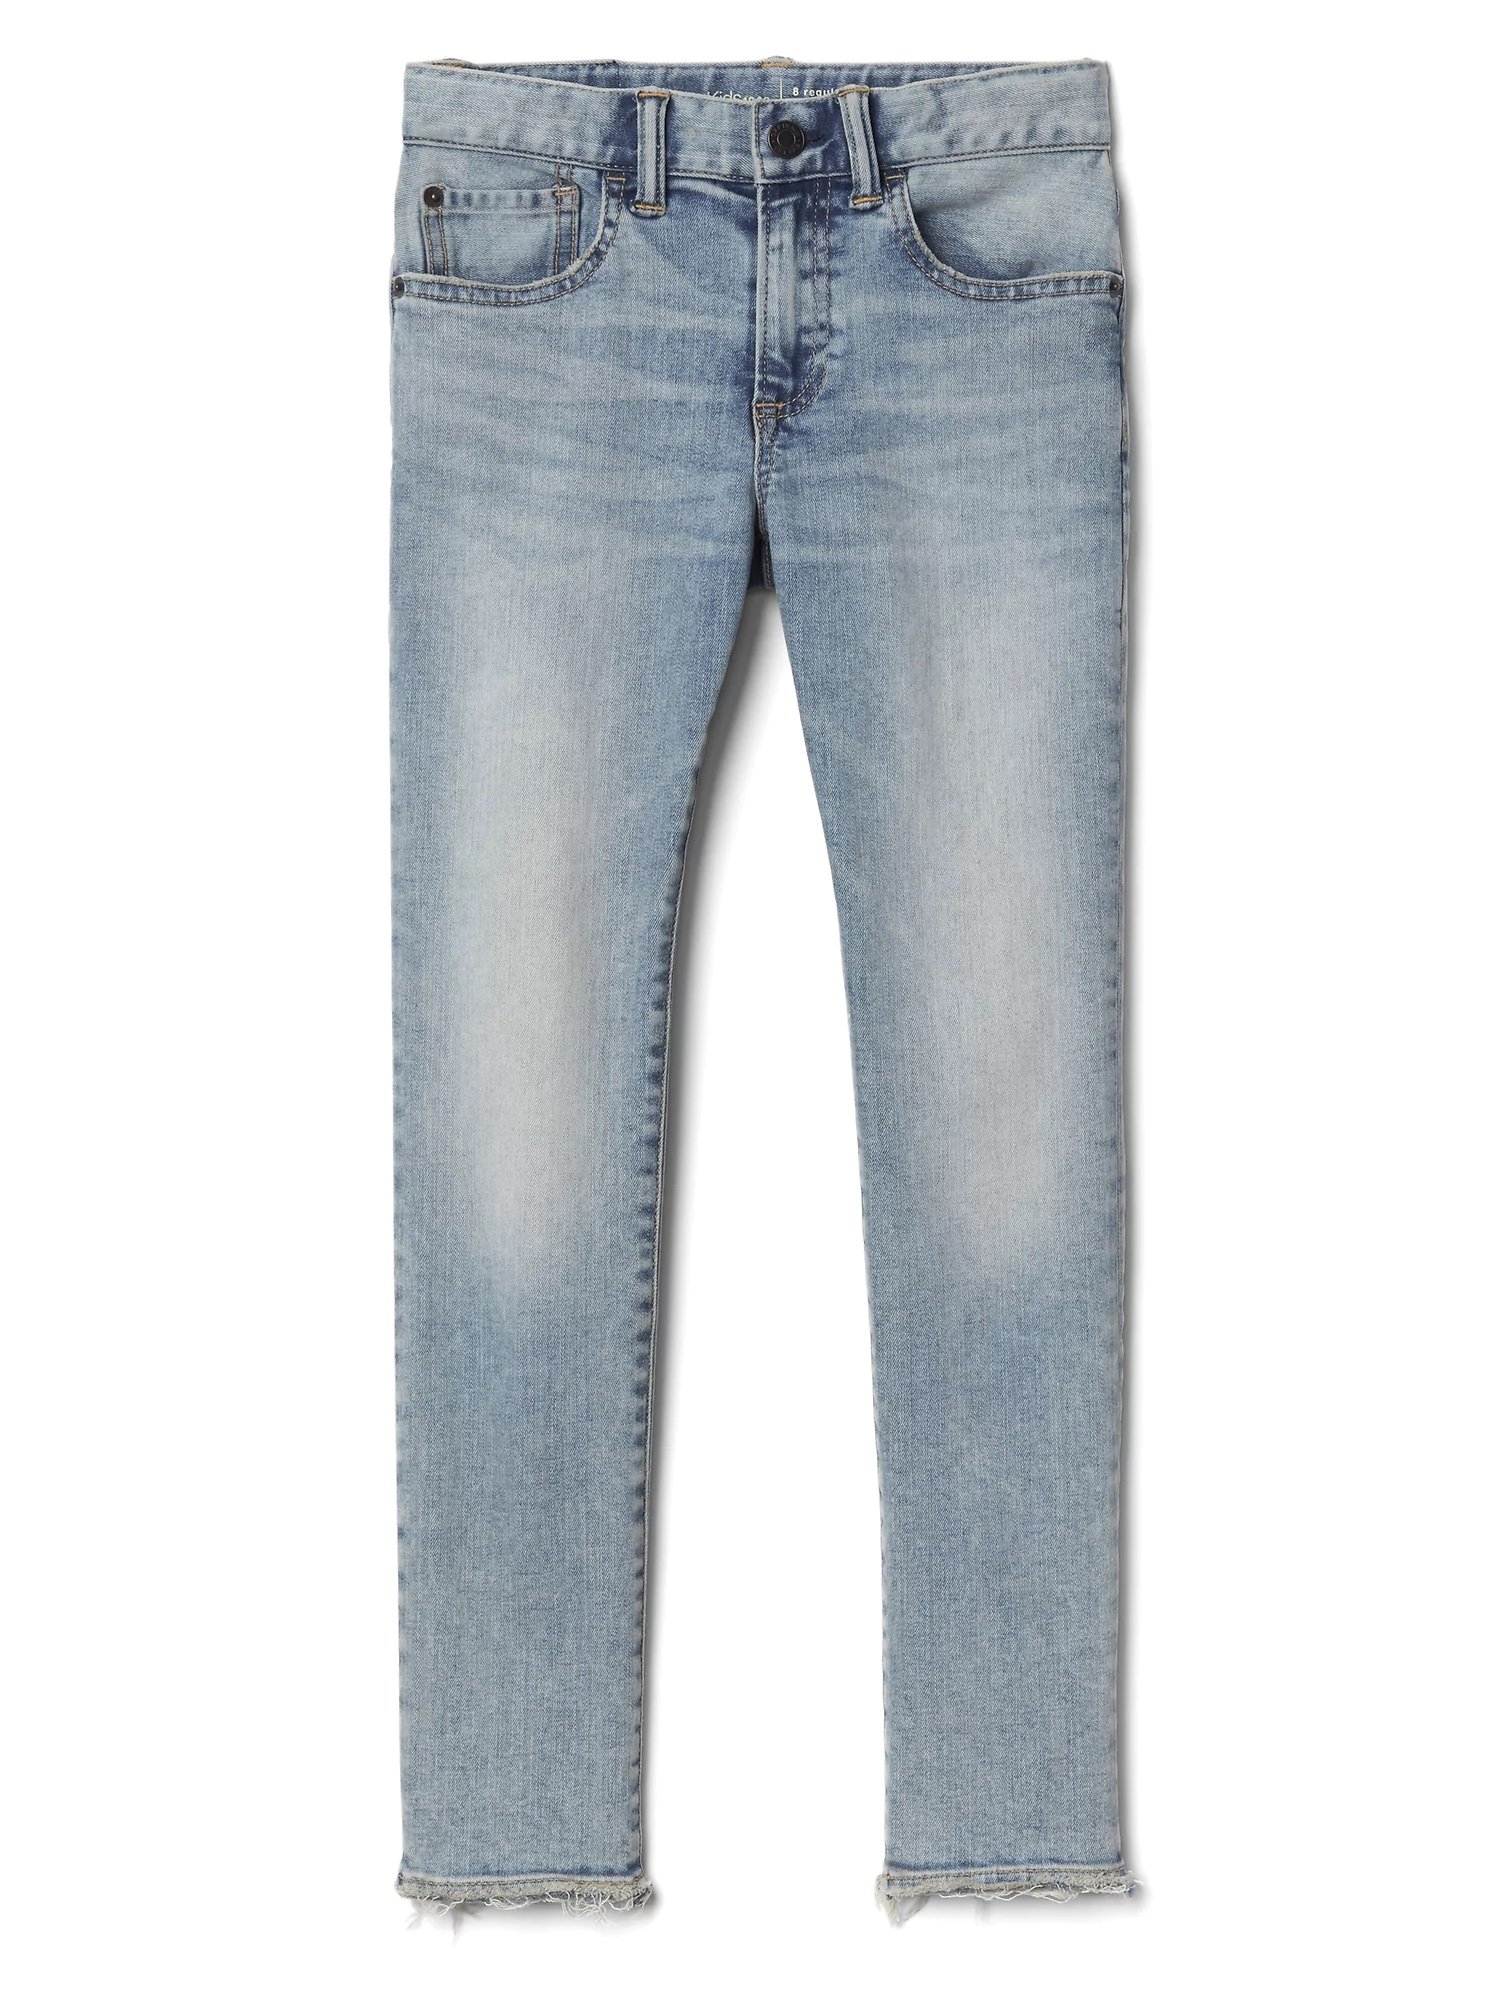 Skinny Fantastiflex jean pantolon product image